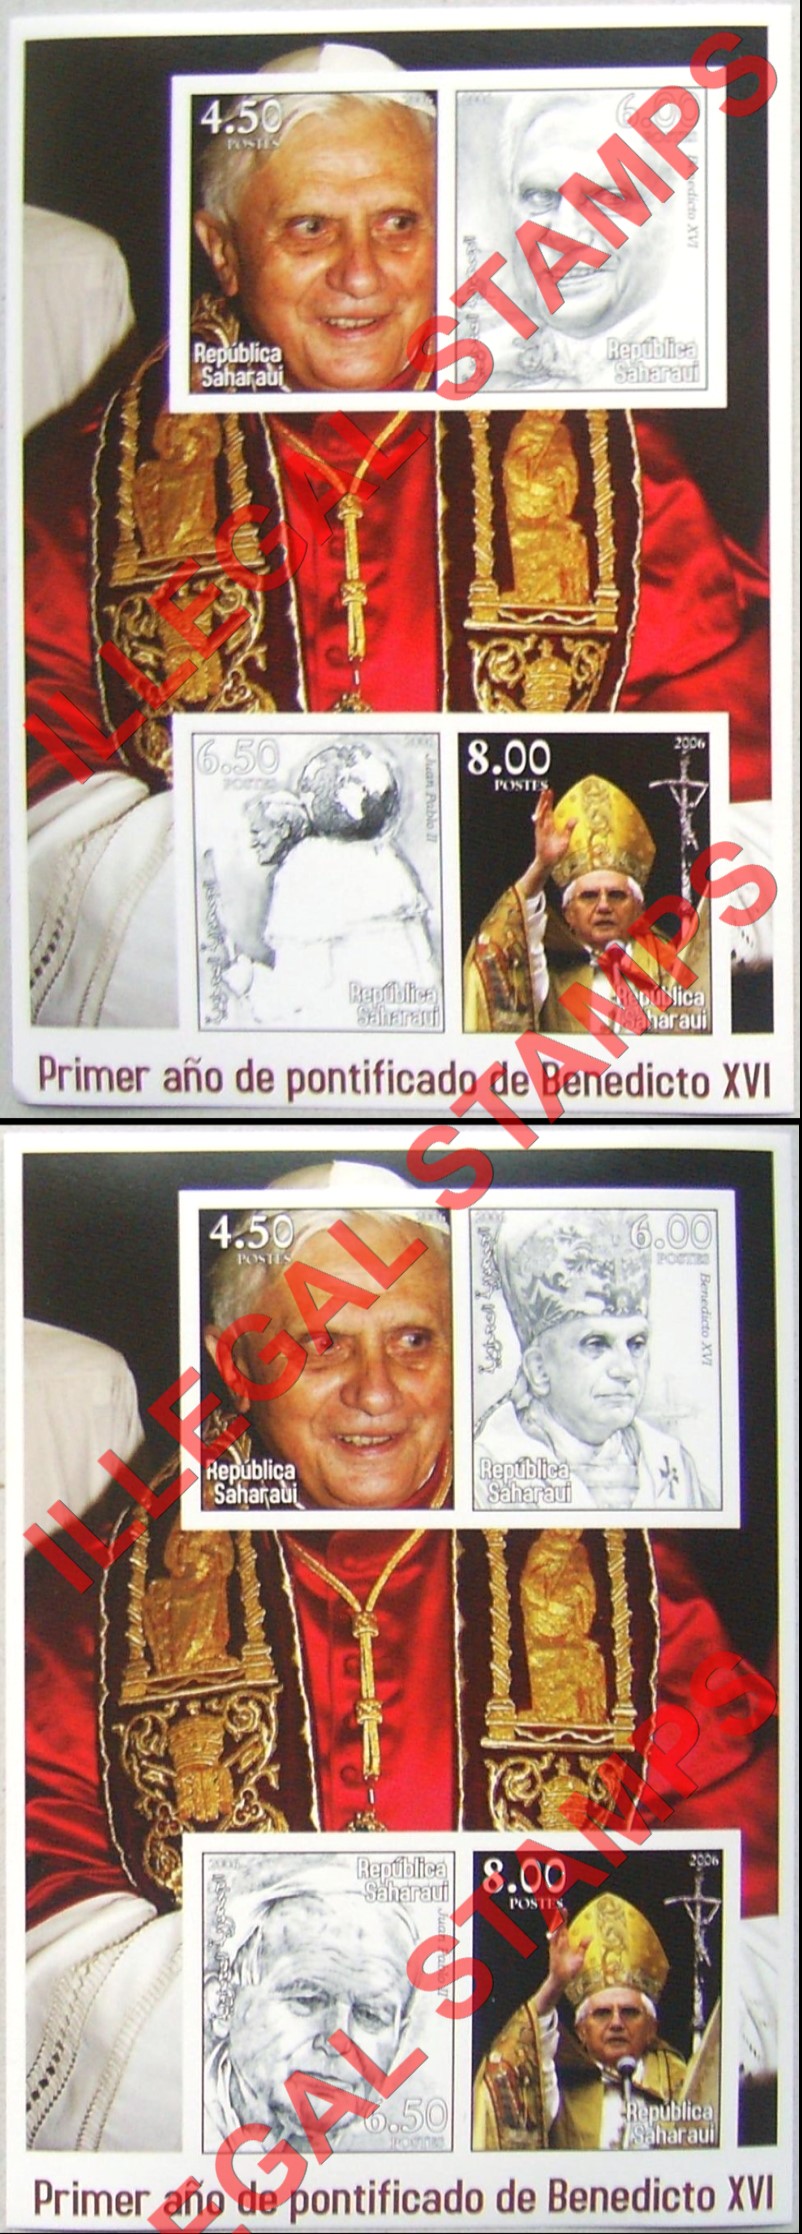 Republica Saharaui 2006 Pope Benedict XVI Counterfeit Illegal Stamp Souvenir Sheets of 4